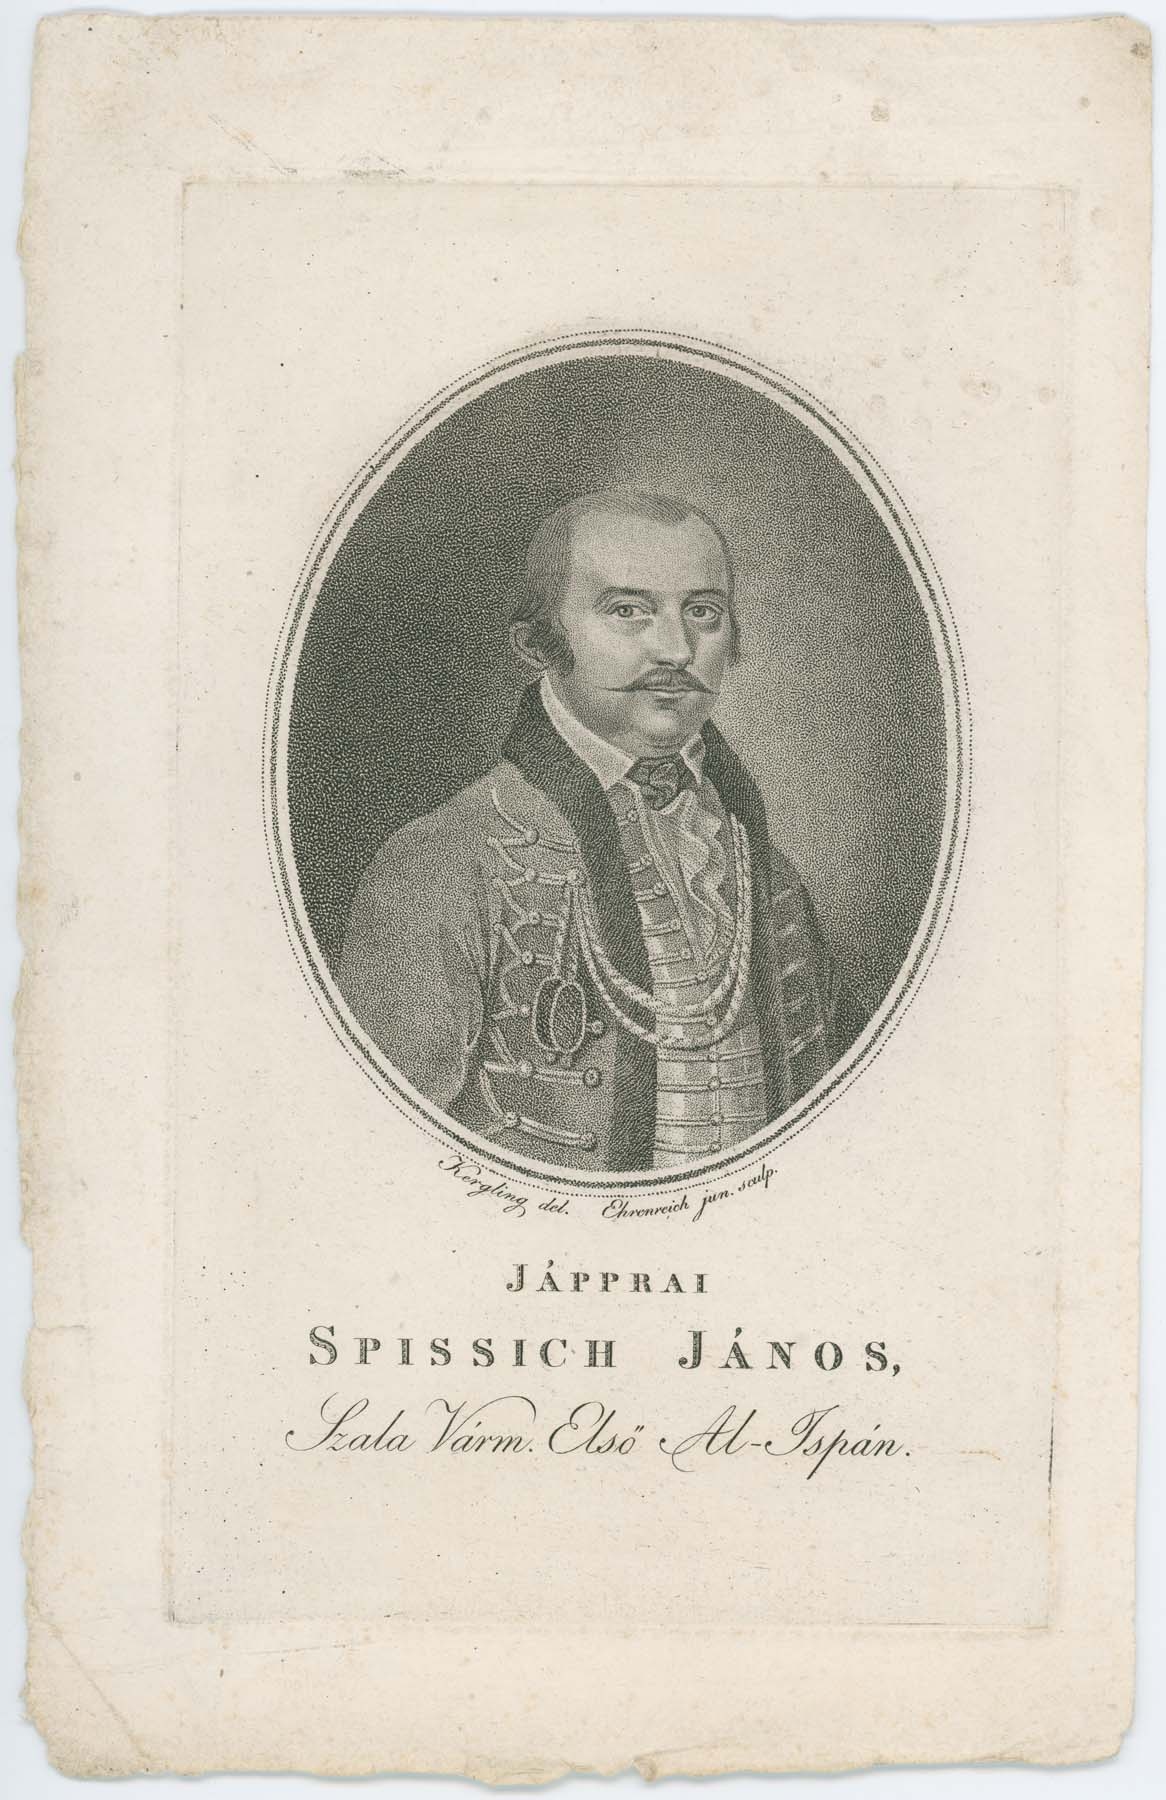 Jápprai Spissich János (Pannonhalma Főapátsági Múzeum CC BY-NC-SA)